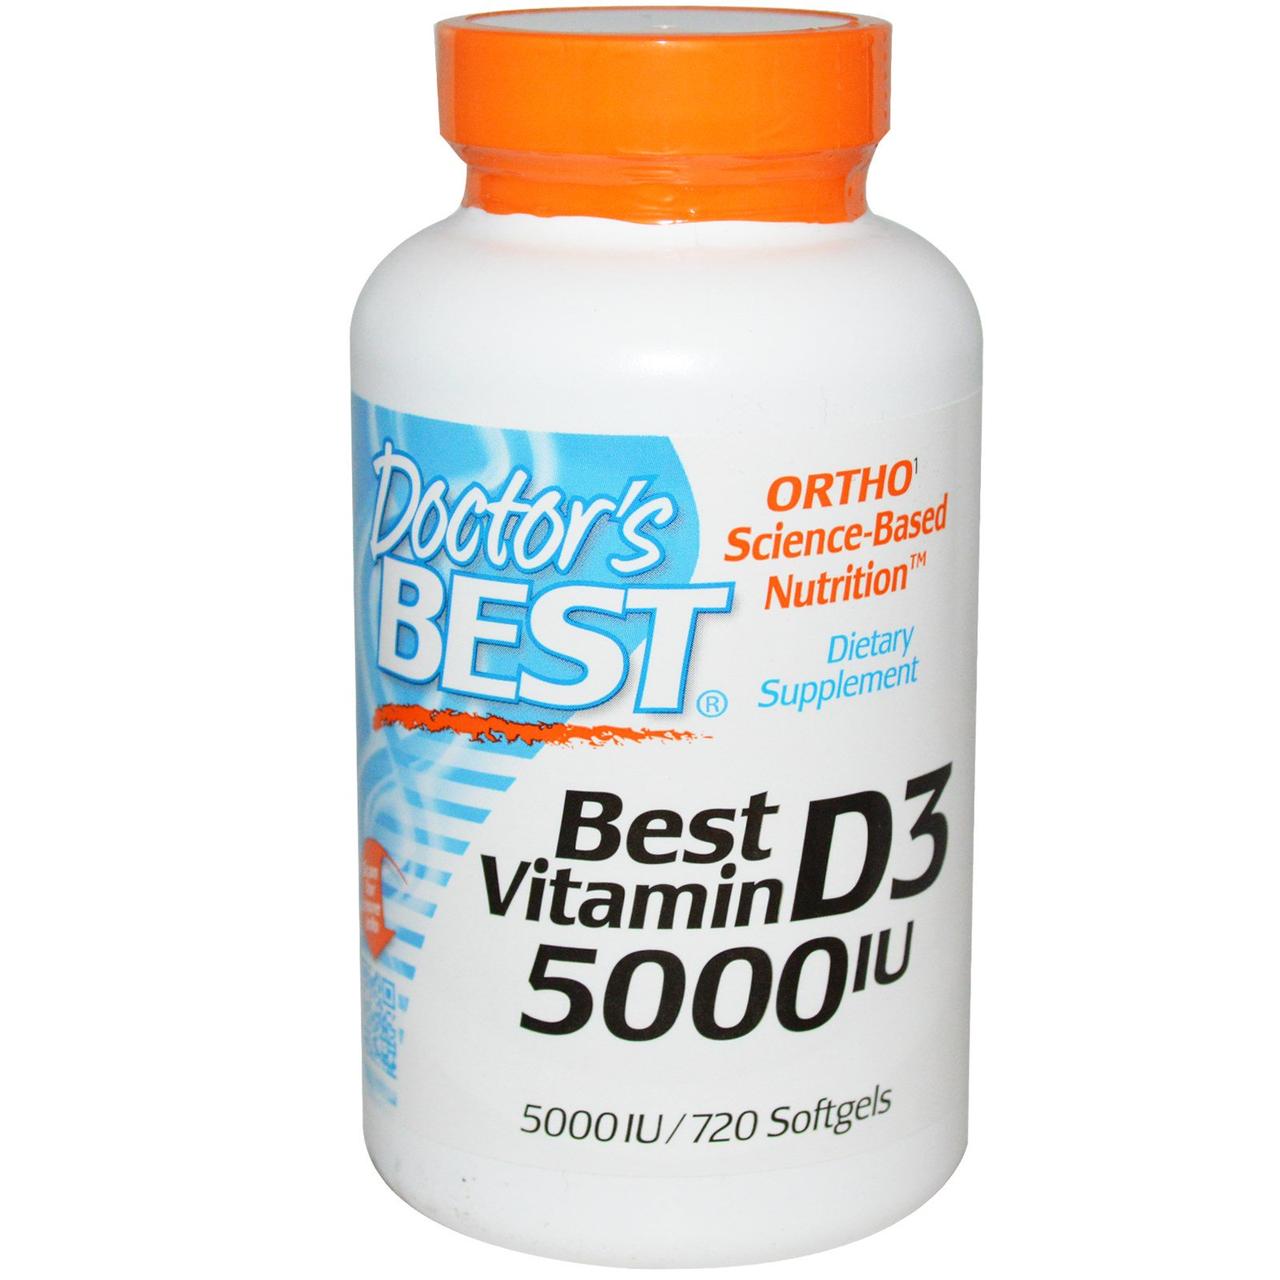 Doctor's BEST Витамин D3 5000IU, Doctor's Best, 720 желатиновых капсул, , 